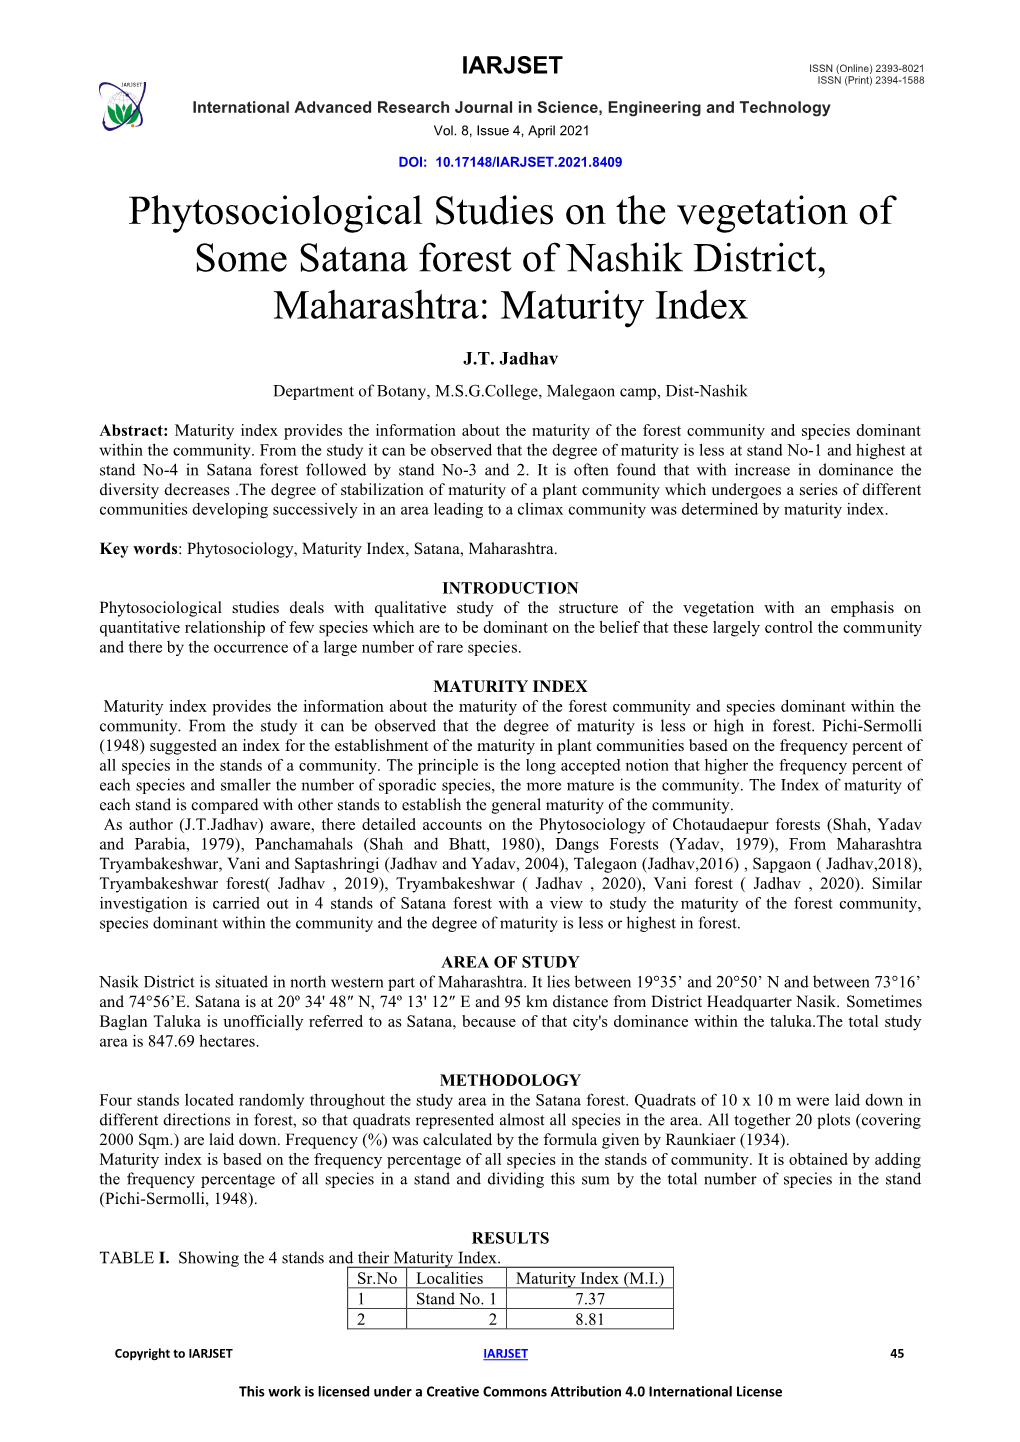 Phytosociological Studies on the Vegetation of Some Satana Forest of Nashik District, Maharashtra: Maturity Index